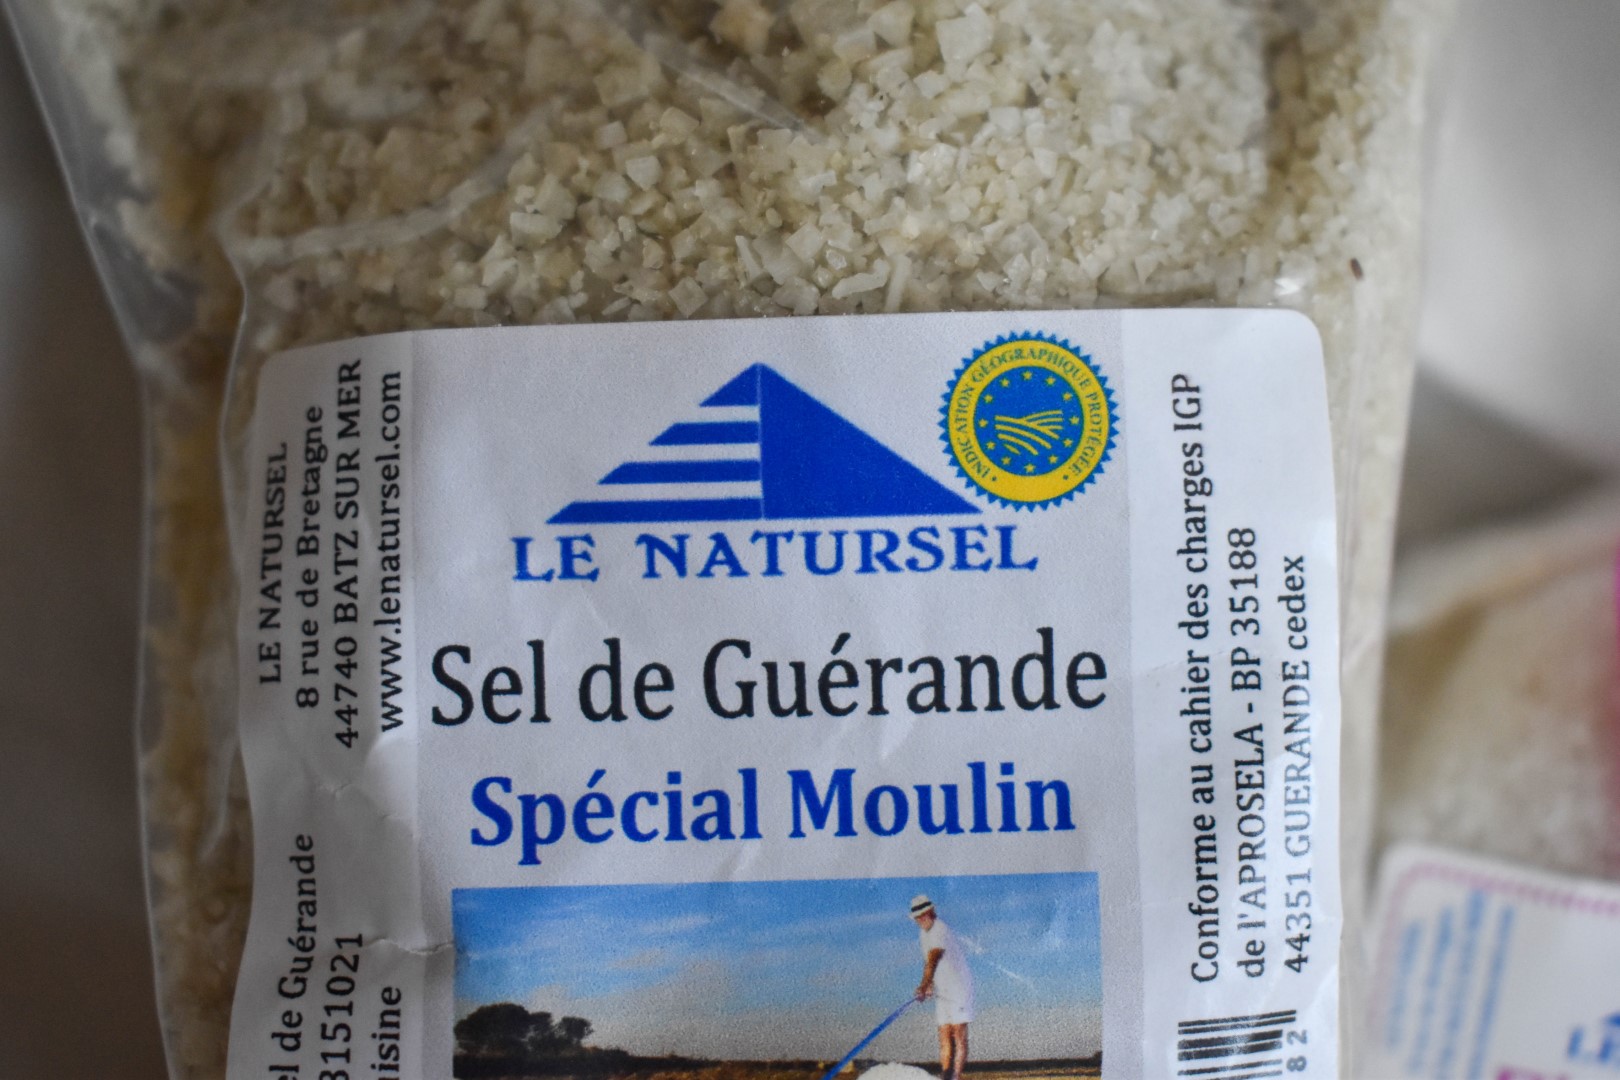 Sea salt from the Atlantic coast